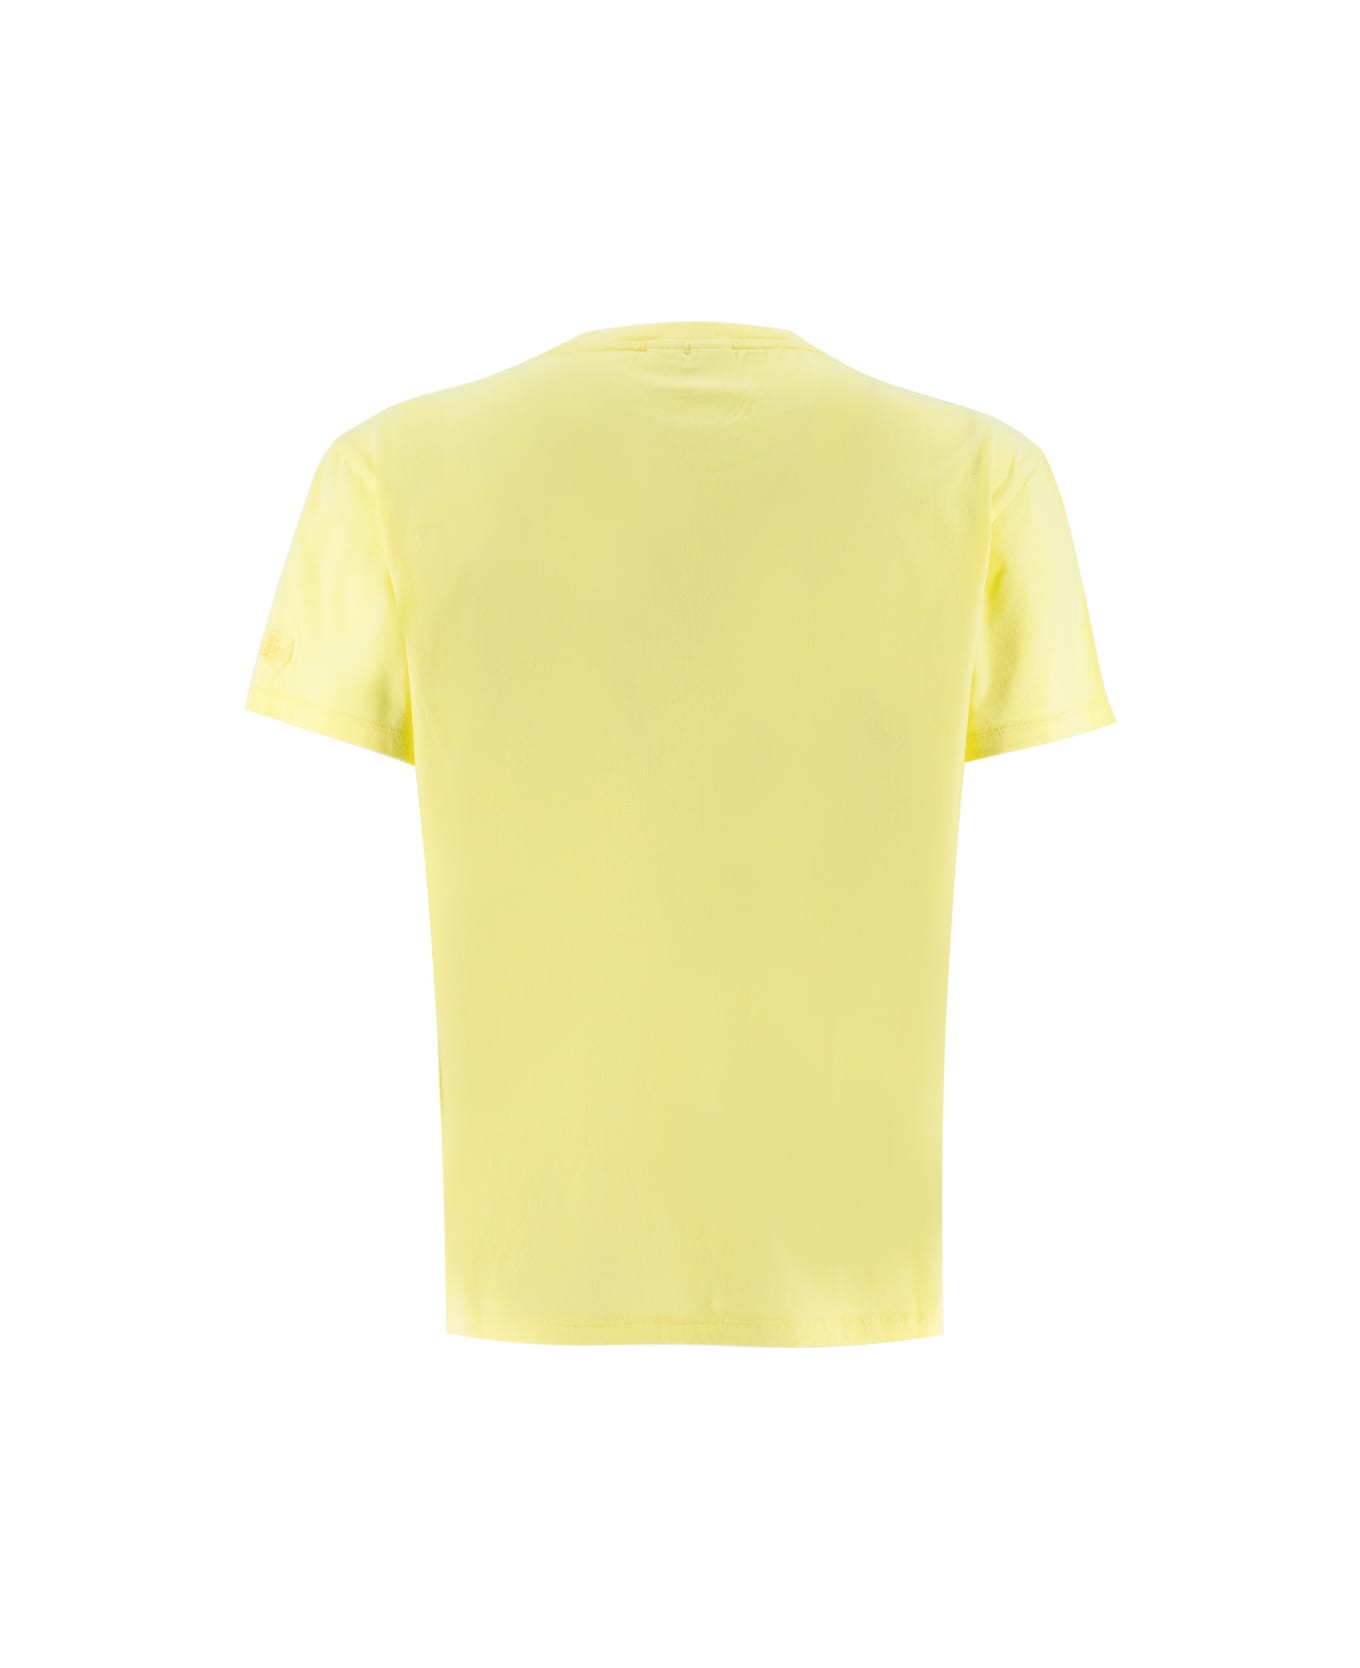 MC2 Saint Barth T-shirt - BUONGIORNO COSA 92 EMB Tシャツ